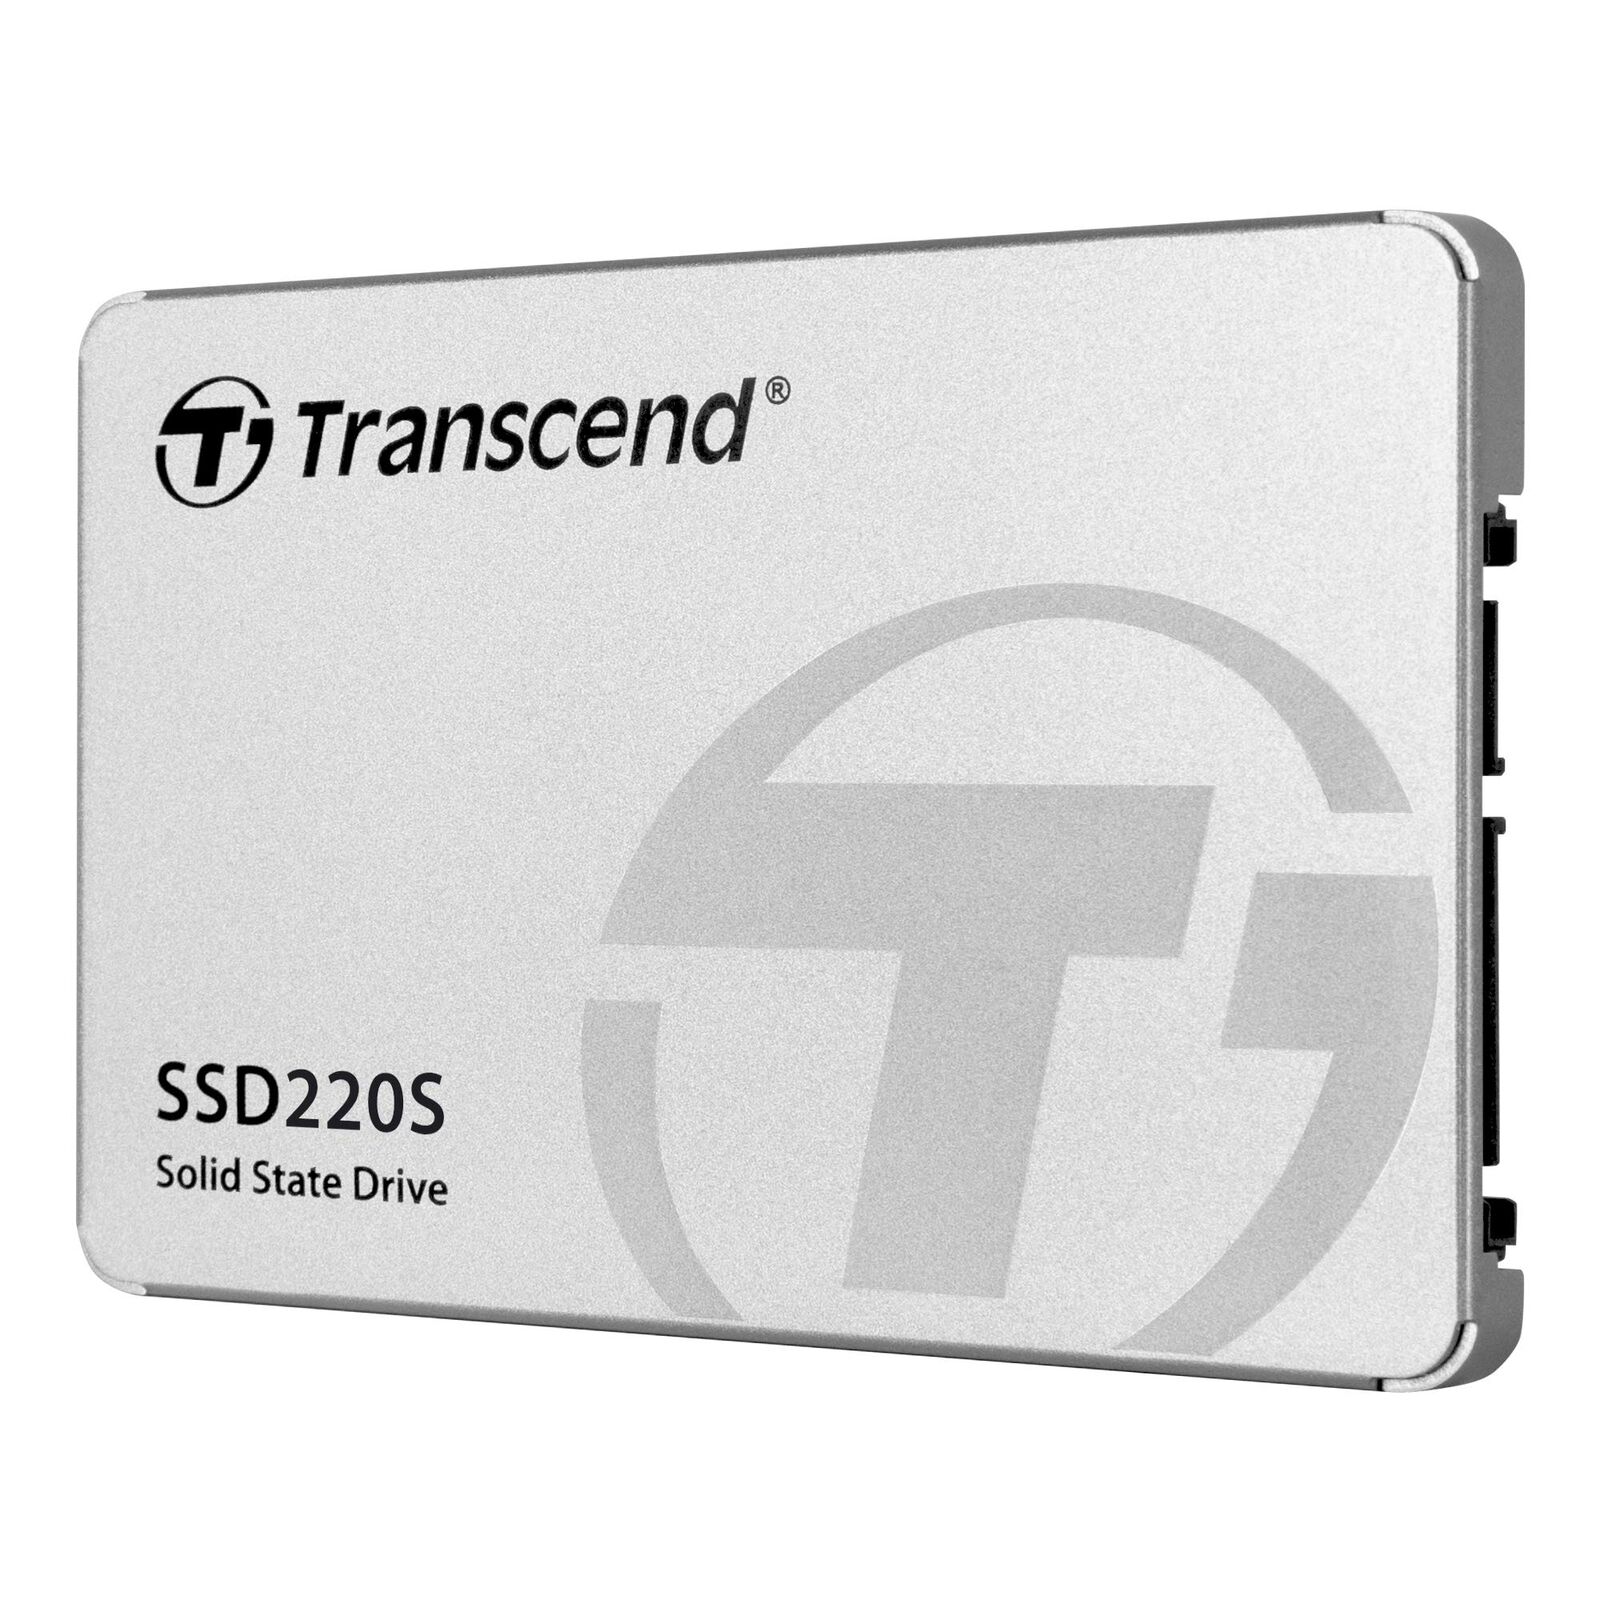 Transcend SSD220S 120 GB 2.5 Inch SATA III 6 Gb/s Internal Solid State Drive (SS